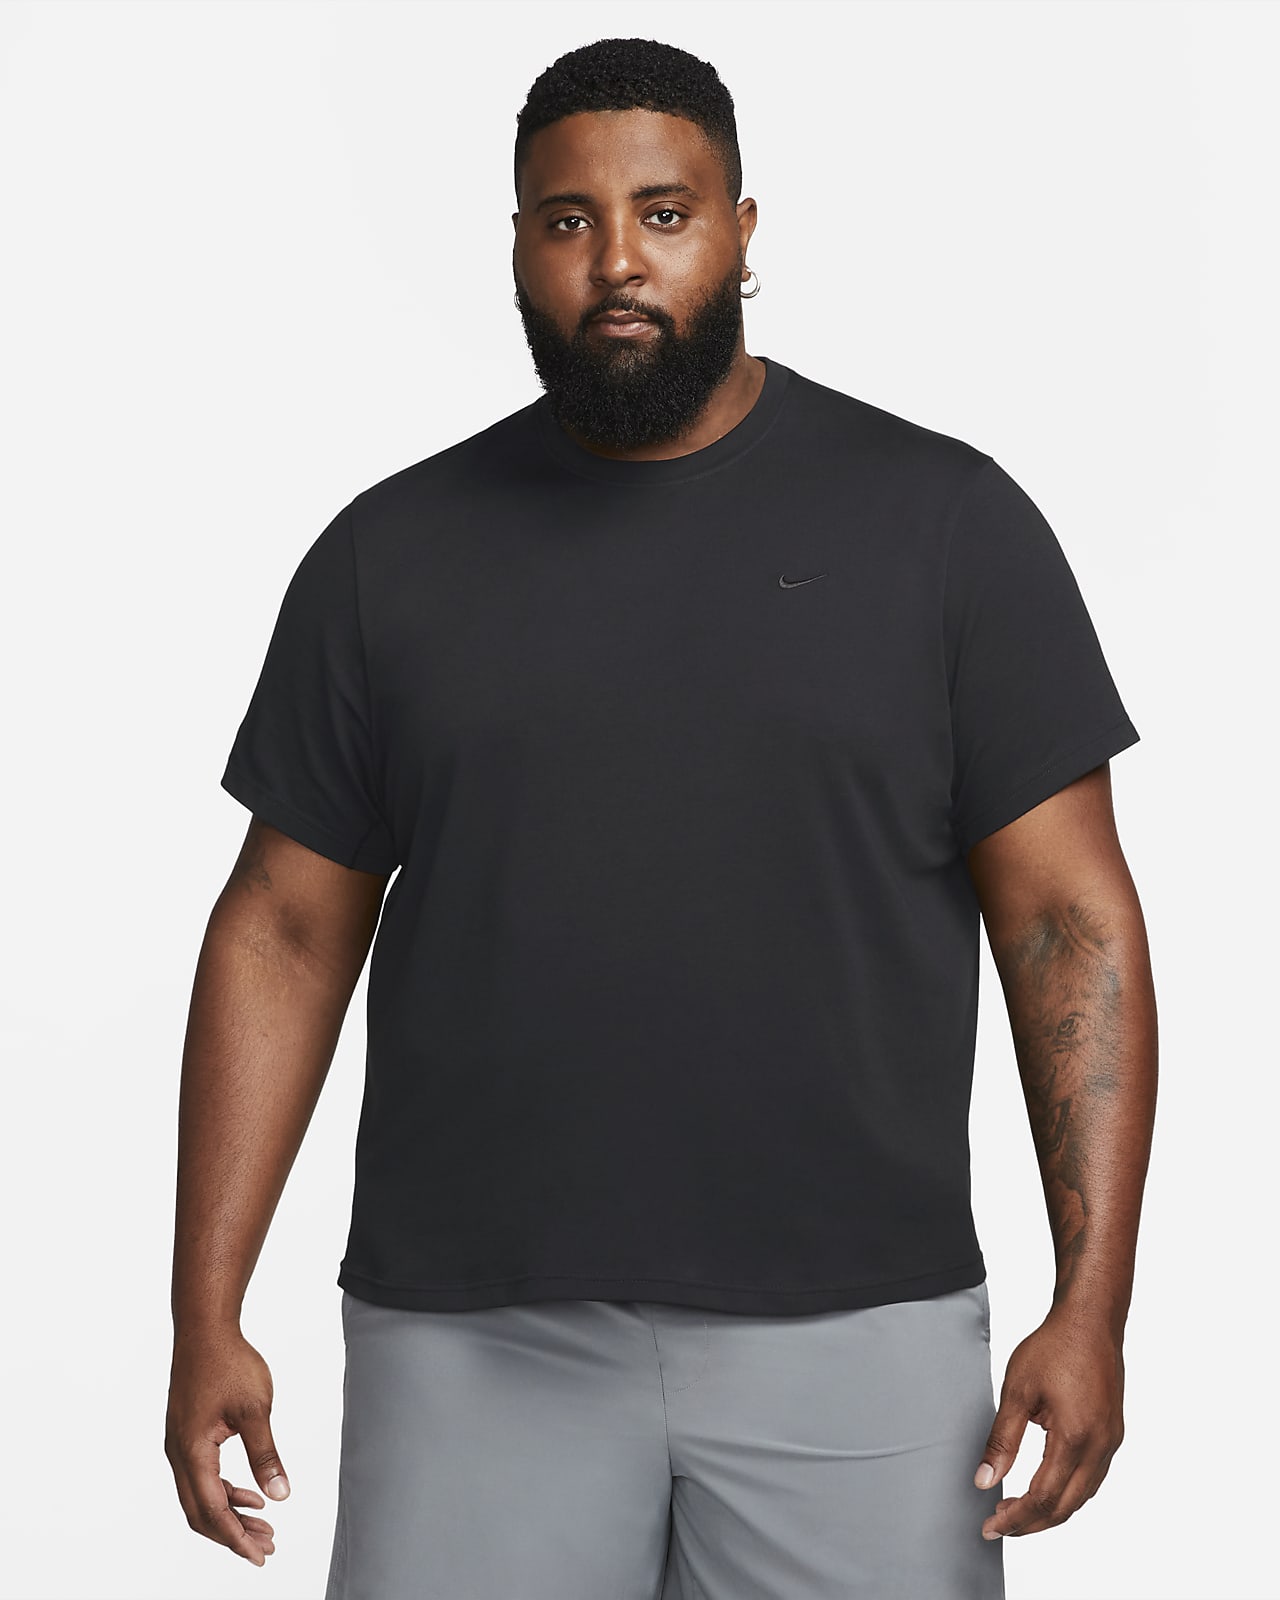 Nike Men's Dri-Fit Primary Versatile Fitness Tank Top, Small, Black